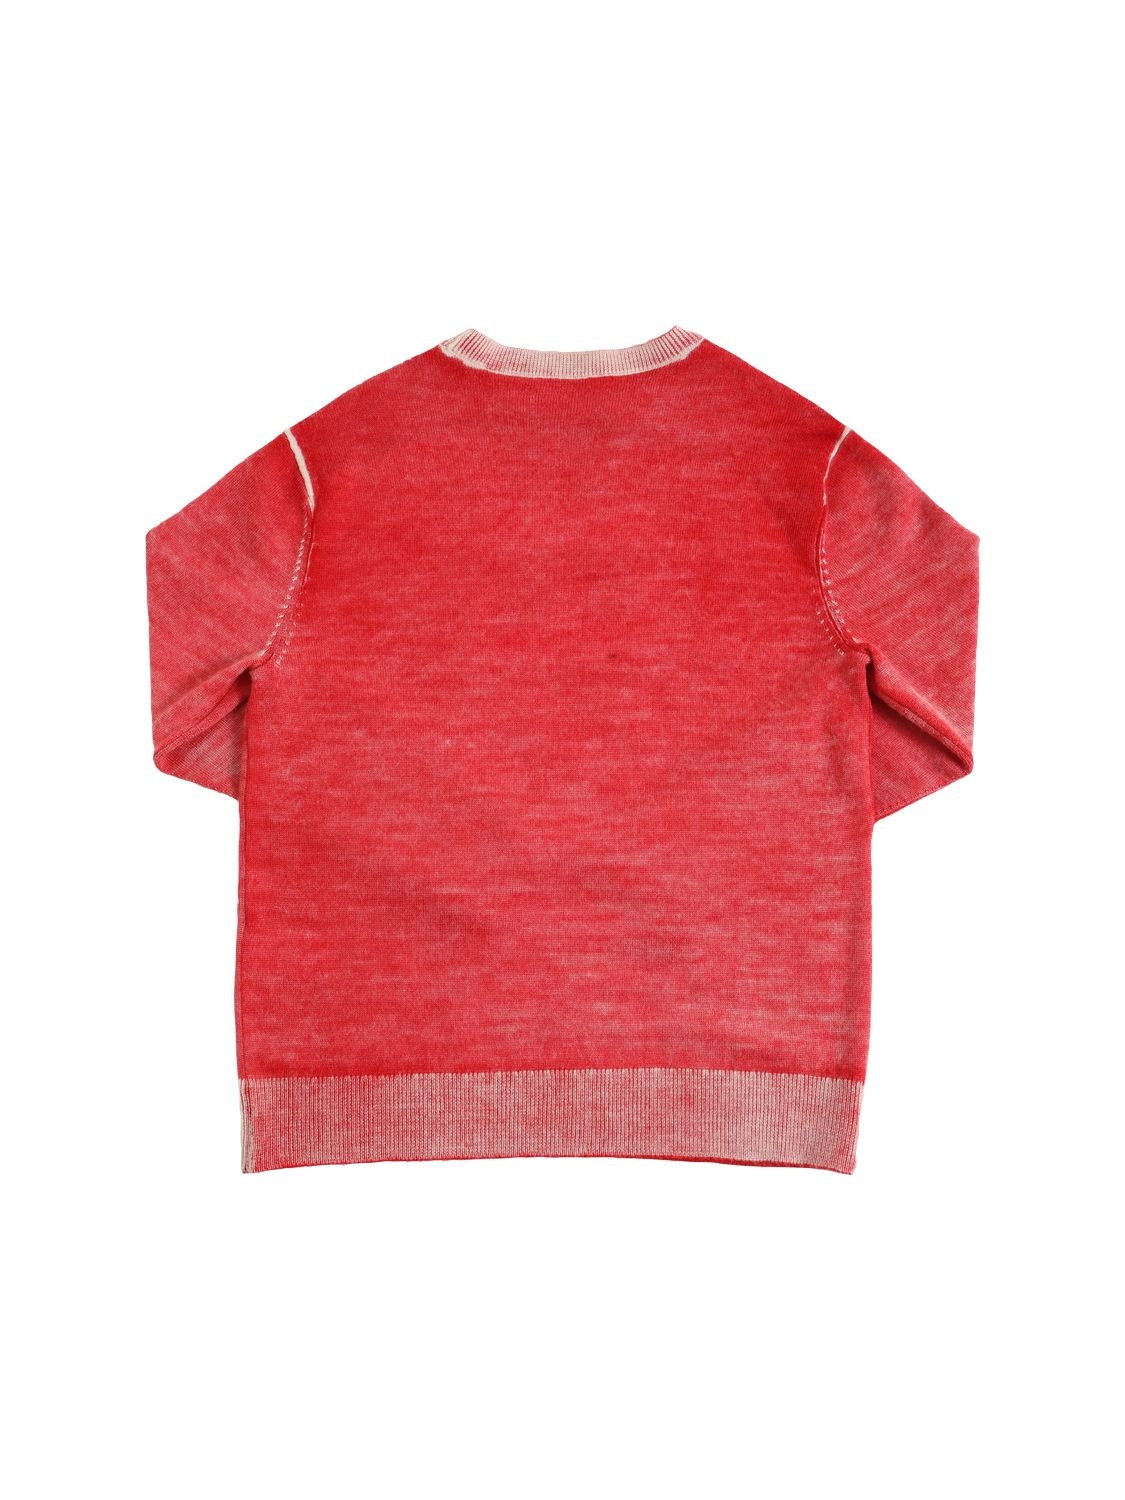 Shop Diesel Washed Wool Knit Sweater W/logo In Red